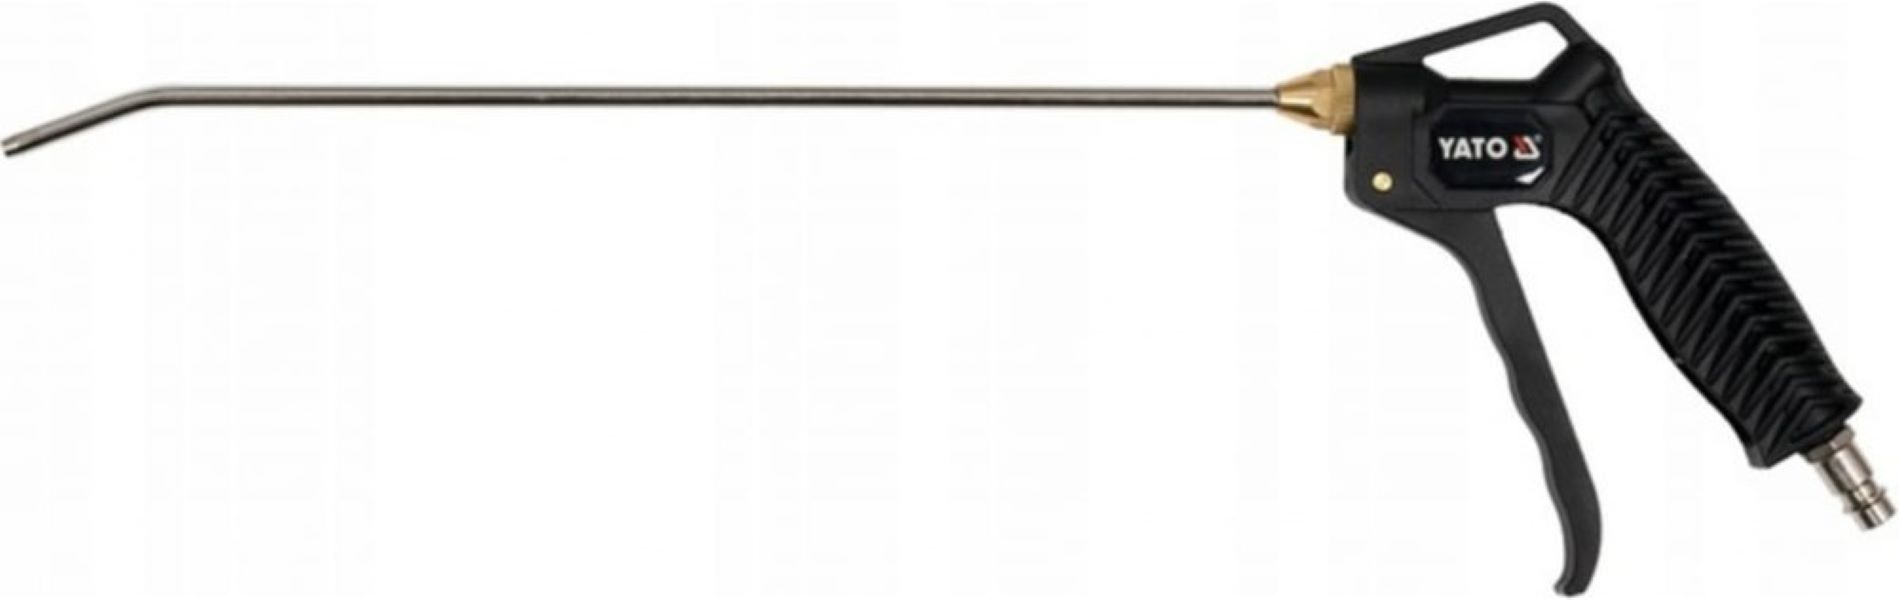 Пистолет Обдувочный 1/4 Inch, 8 Бар, 320 Мм, Блистер YATO арт. YT-23732 пескоструйный пистолет yato